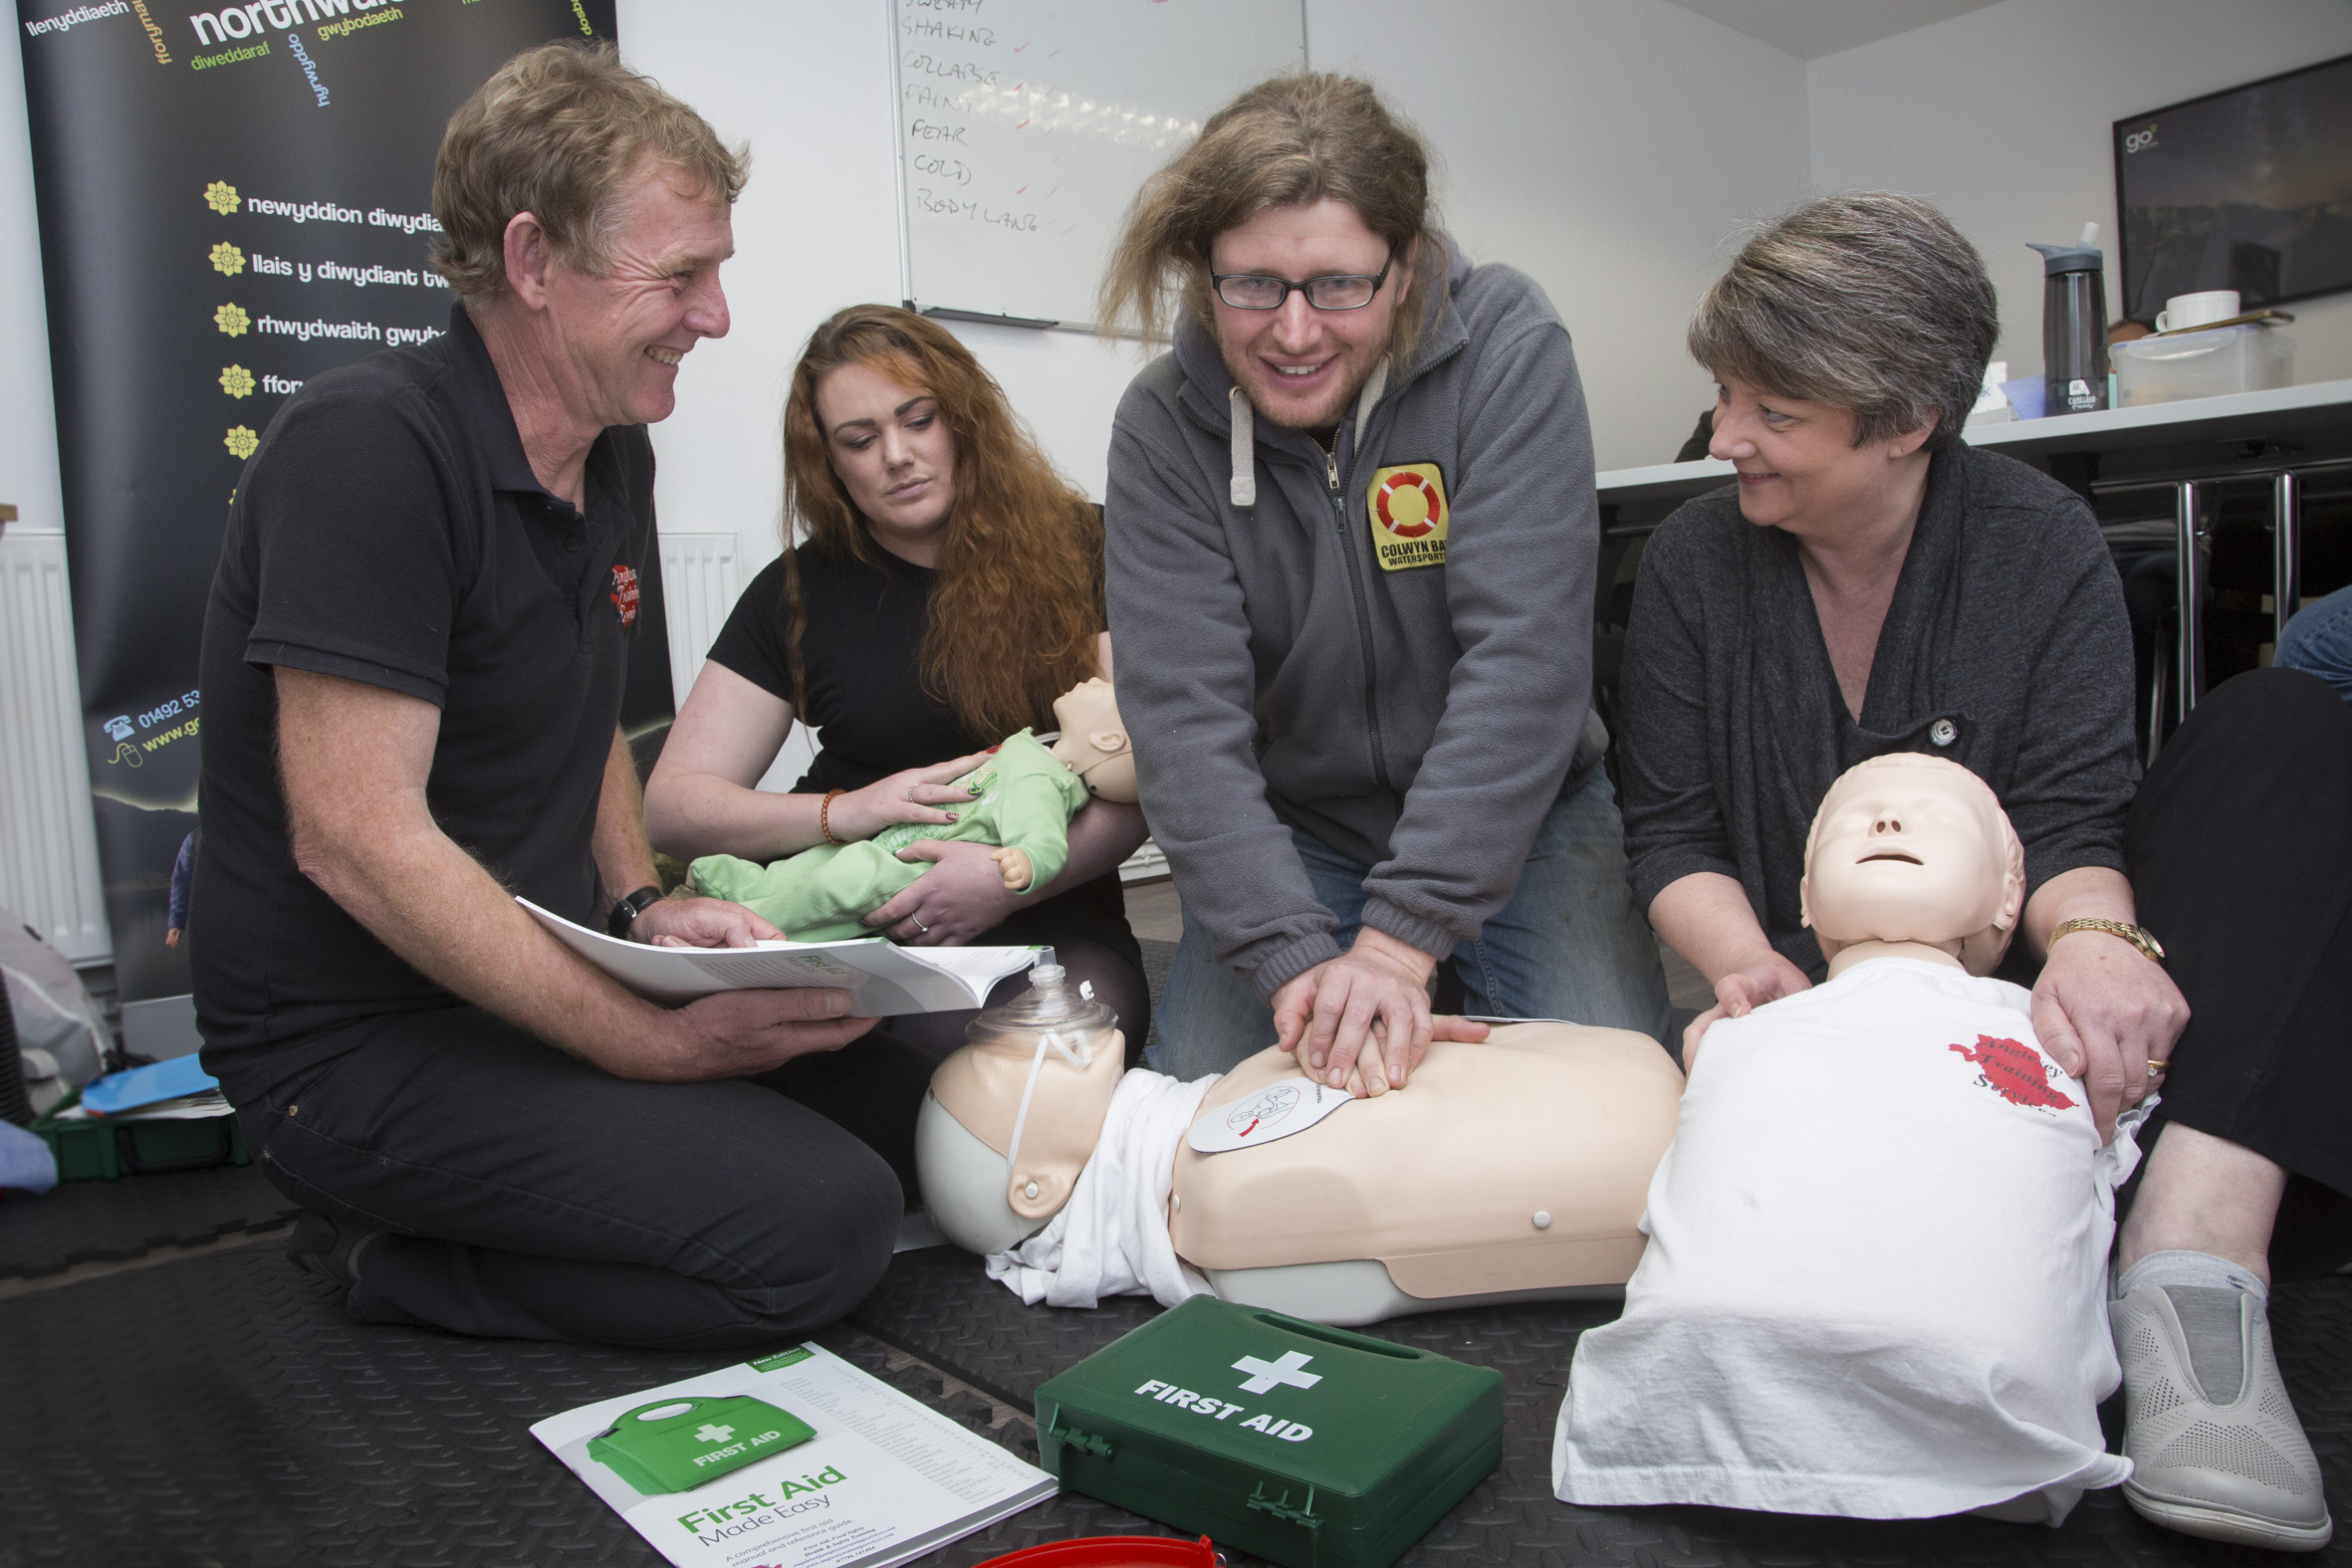 Staff given vital life-saving first aid training thanks to Colwyn BID